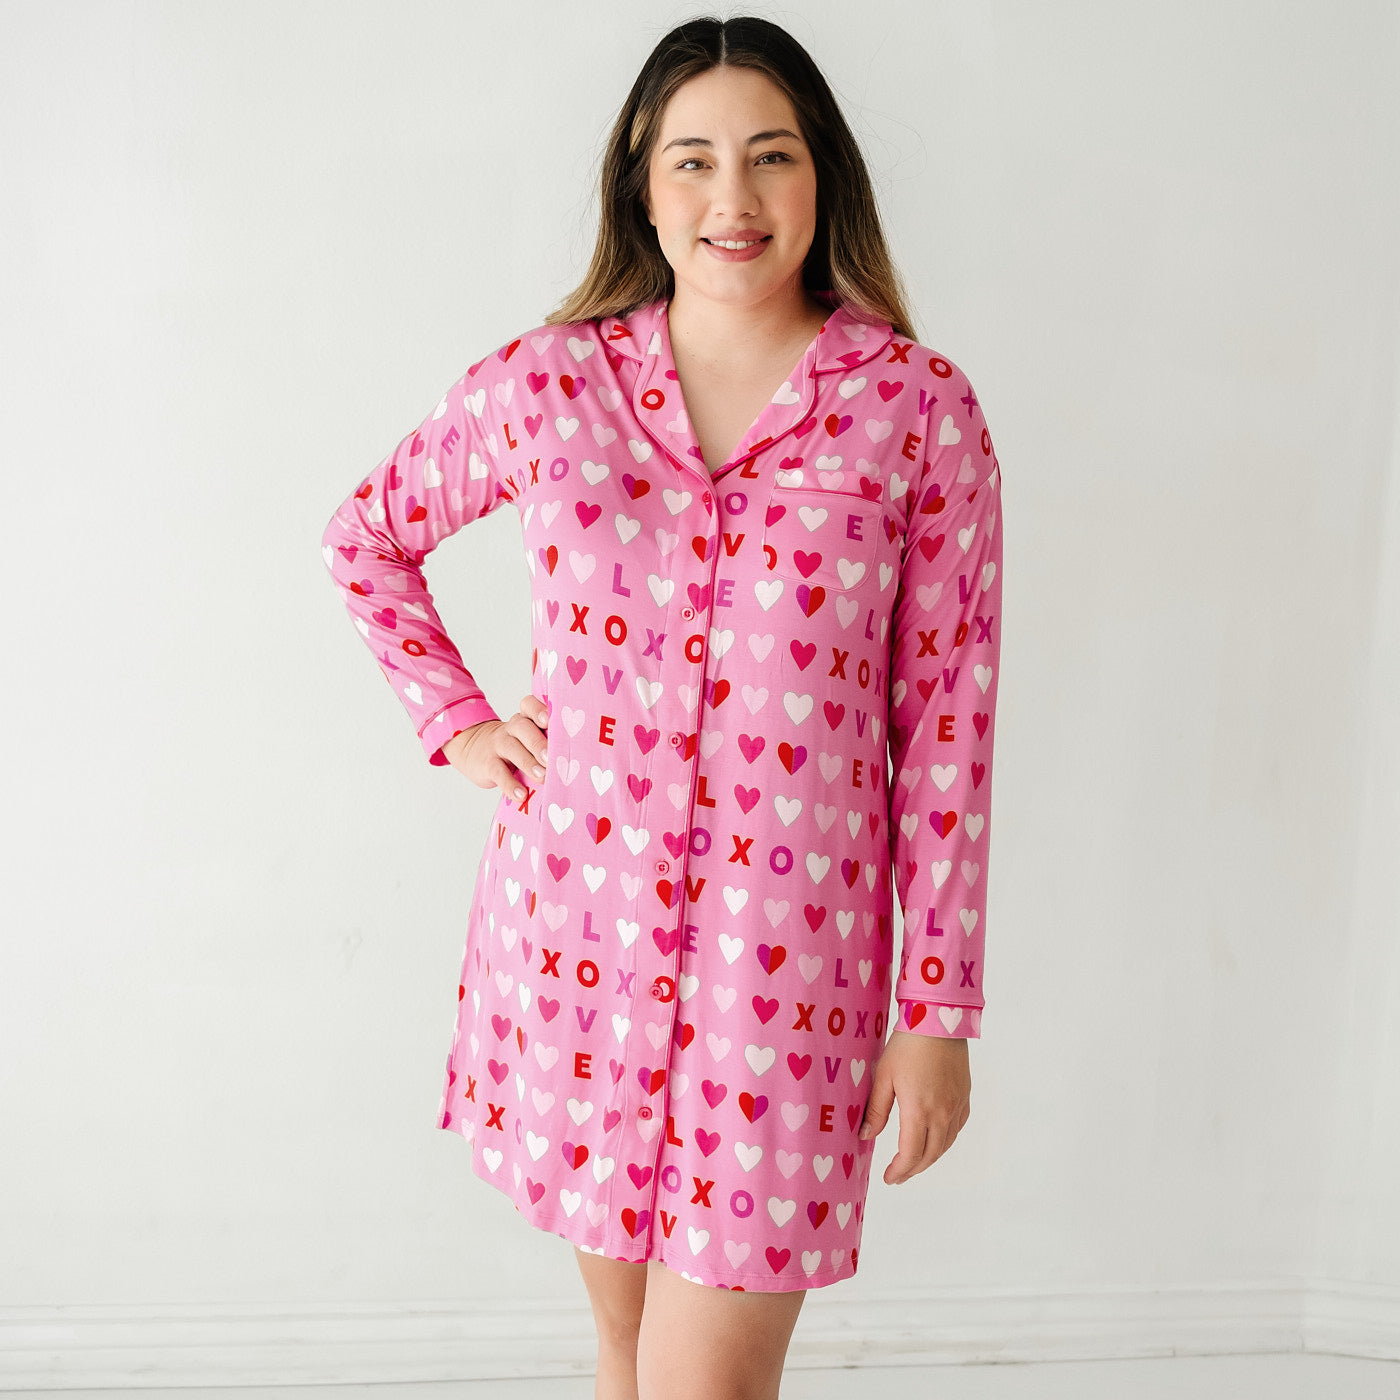 Alternate image of a woman wearing a Pink XOXO women's sleep shirt